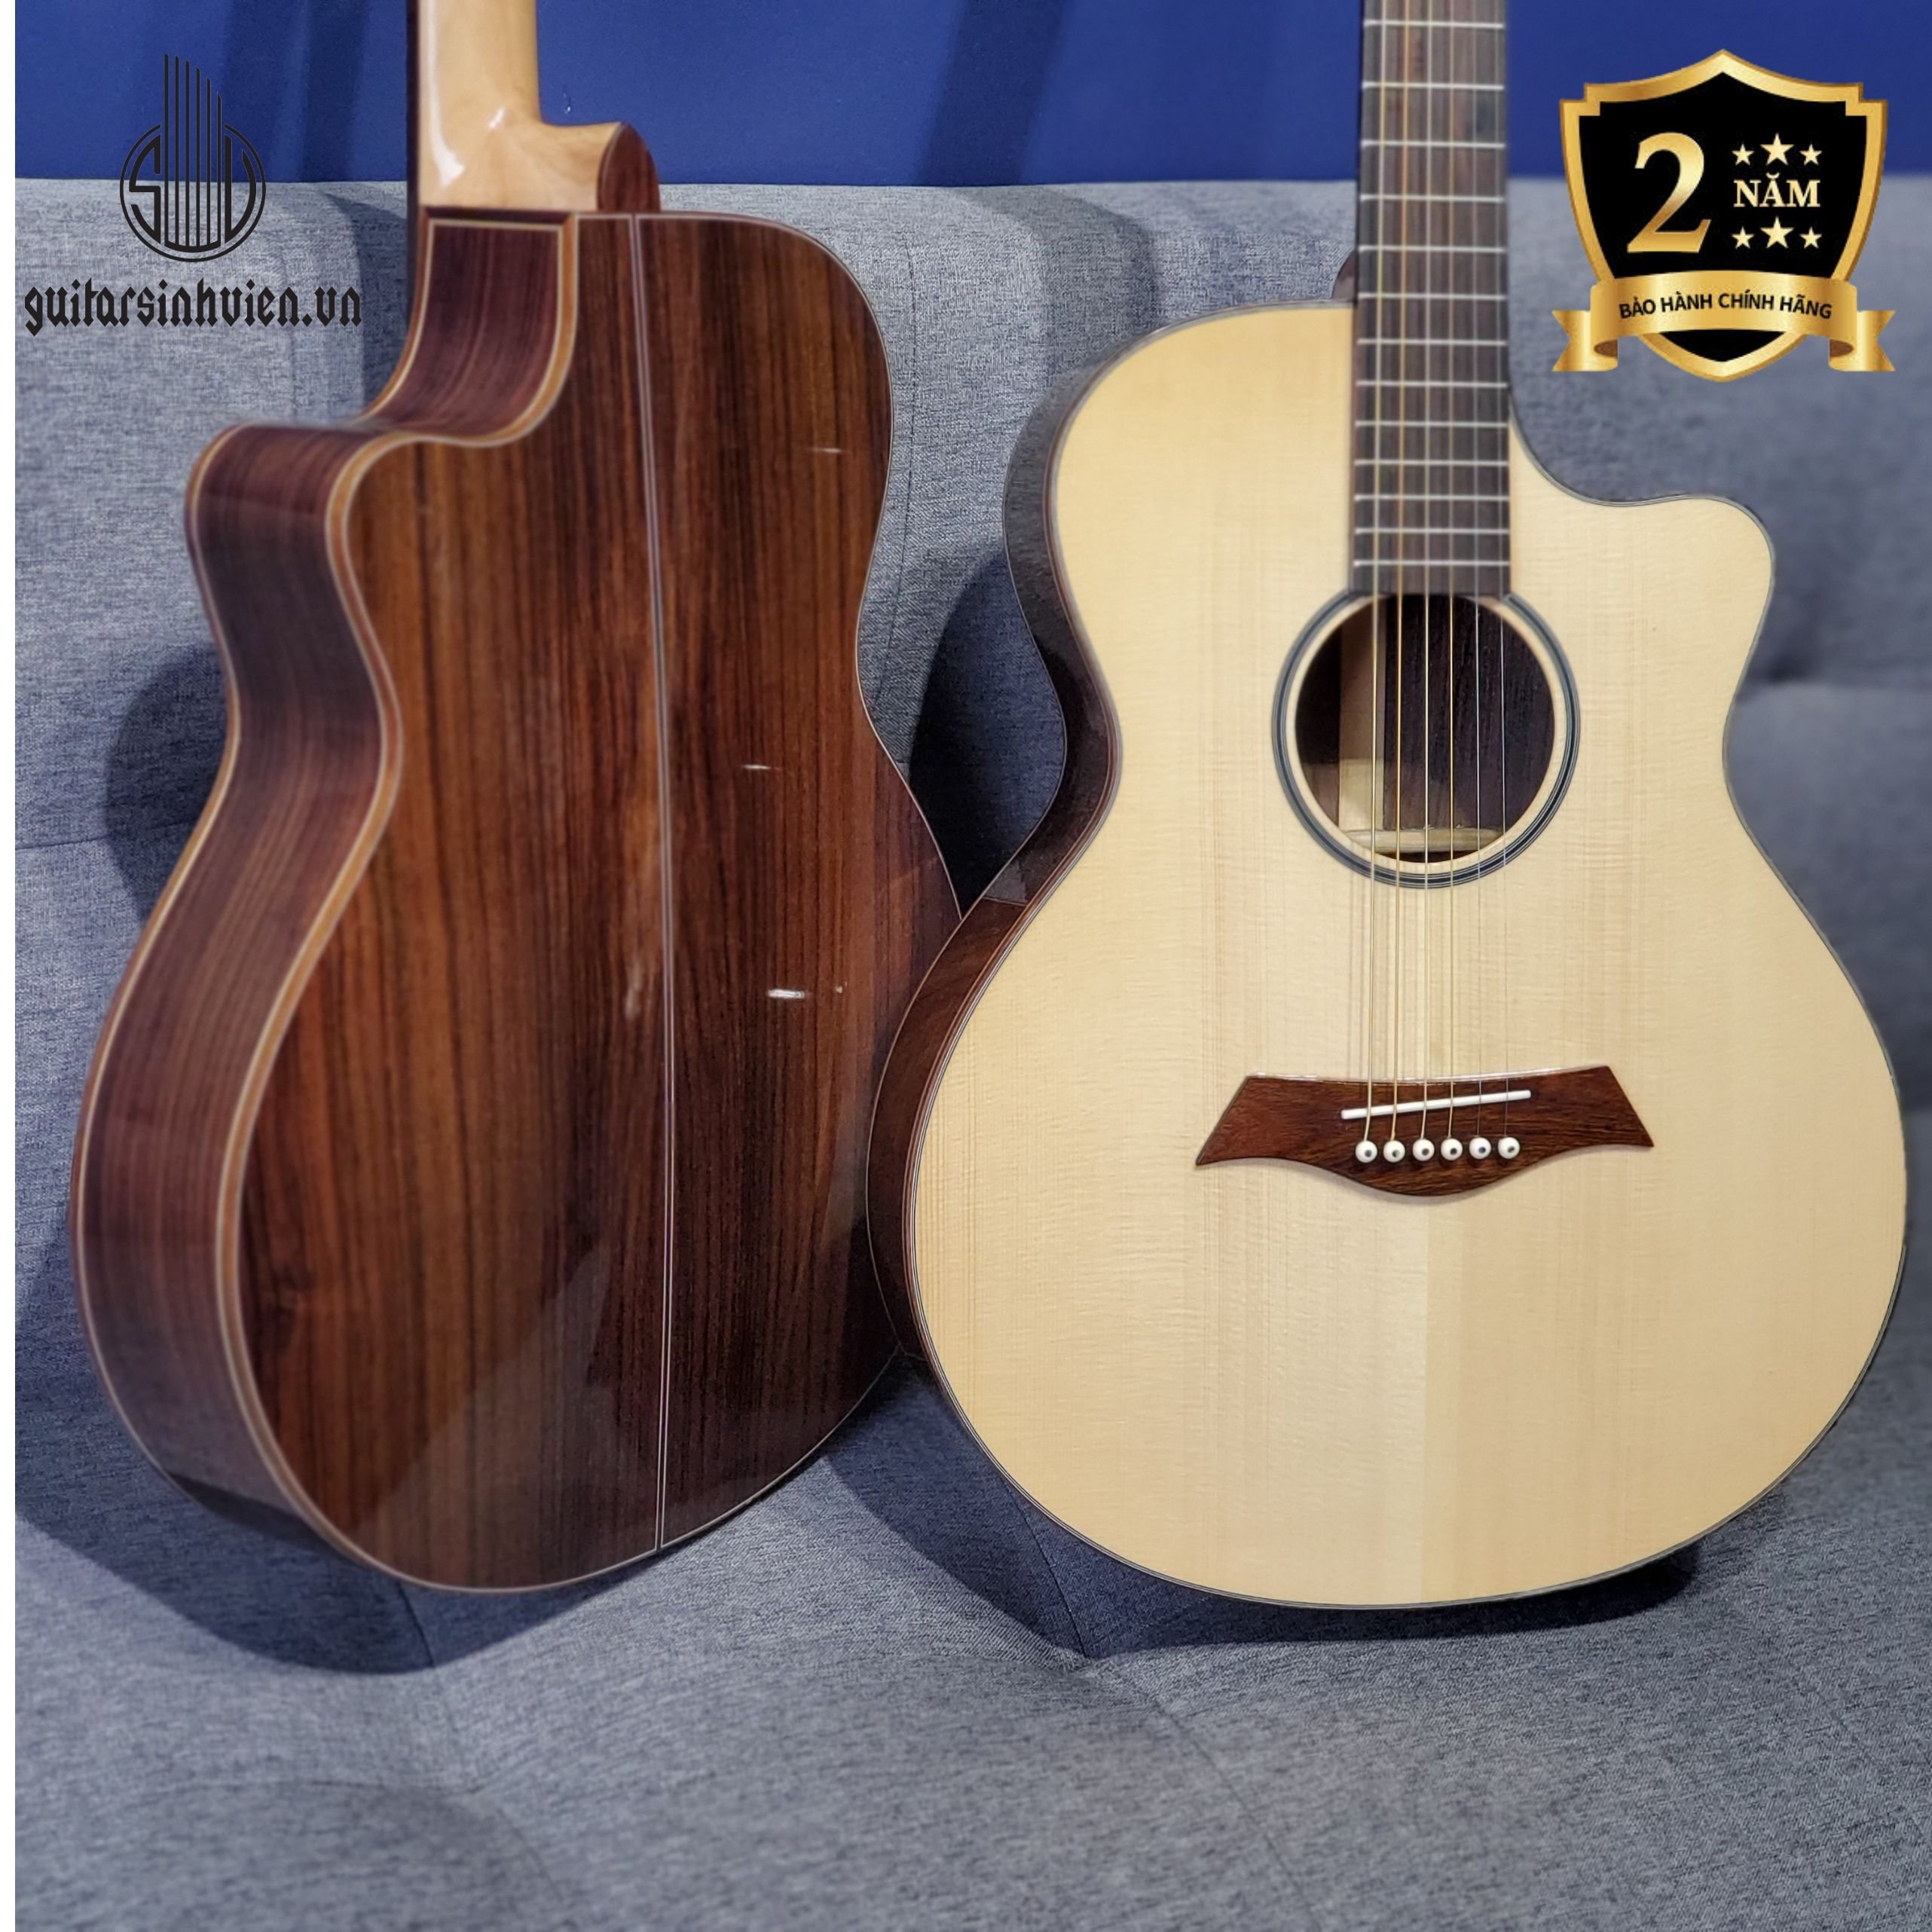 Đàn guitar acoustic gỗ cẩm ấn cao cấp SV-A7